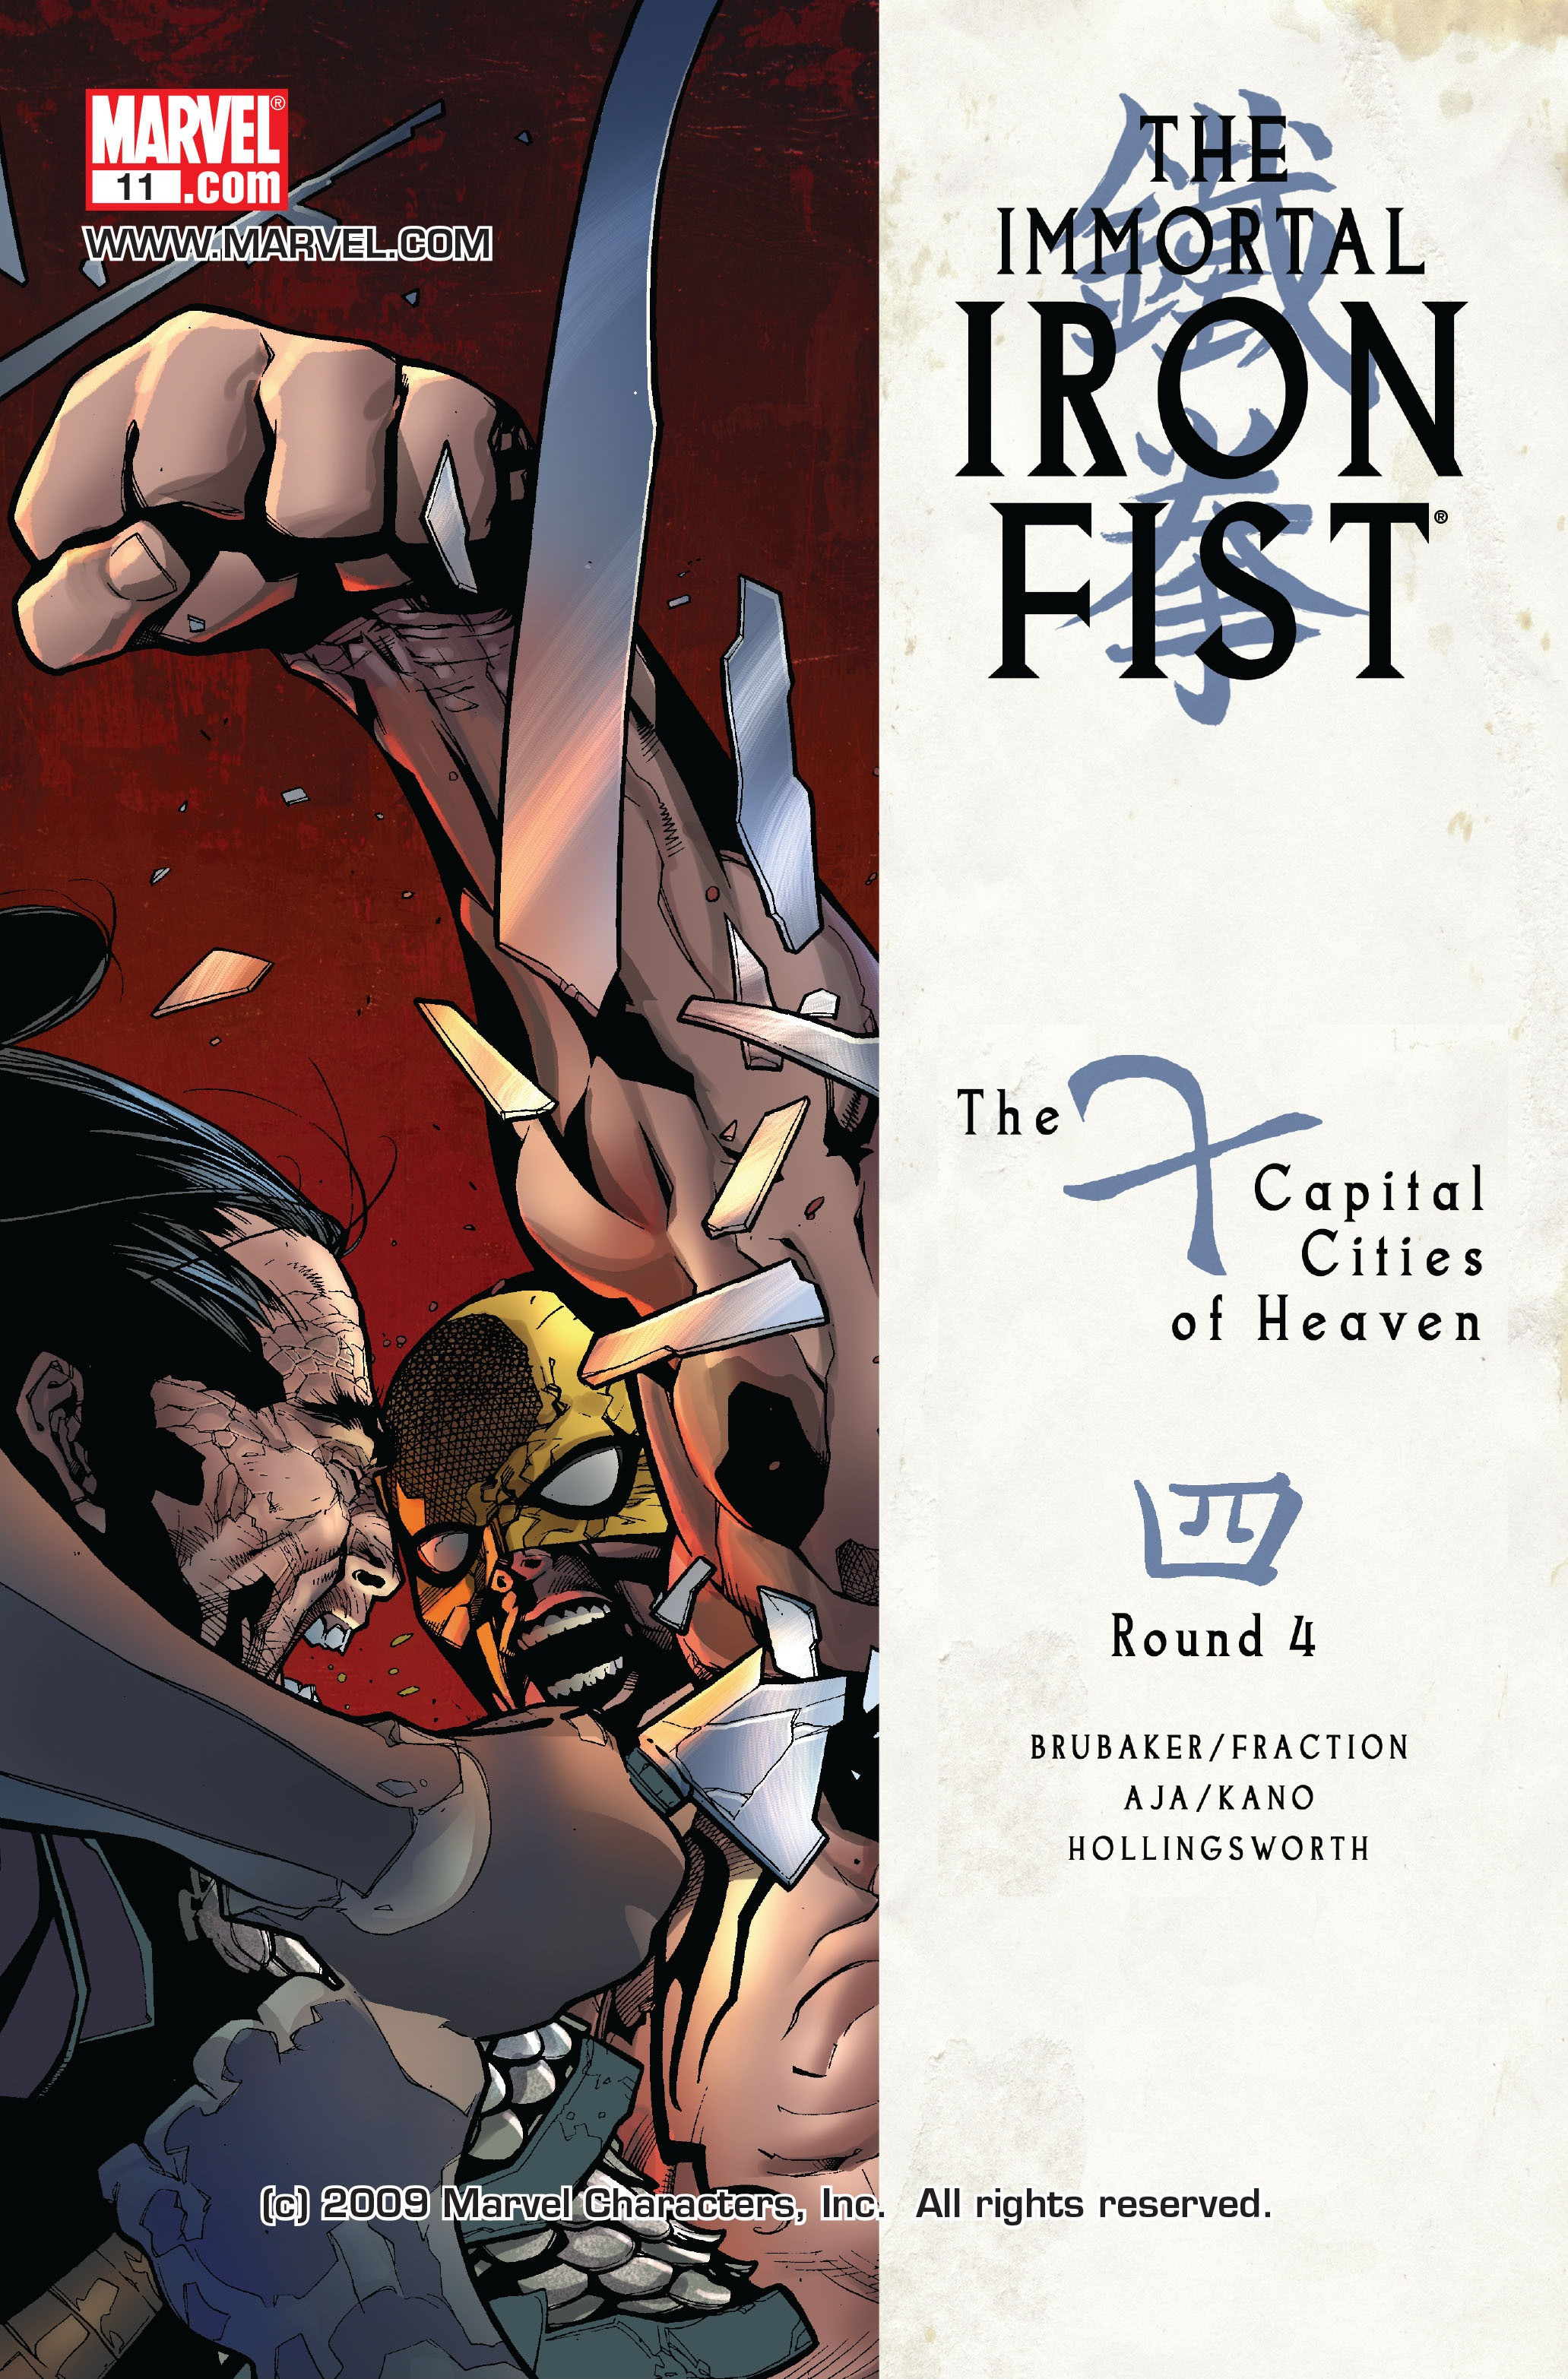 Iron Fist Vol 1 11, Marvel Database